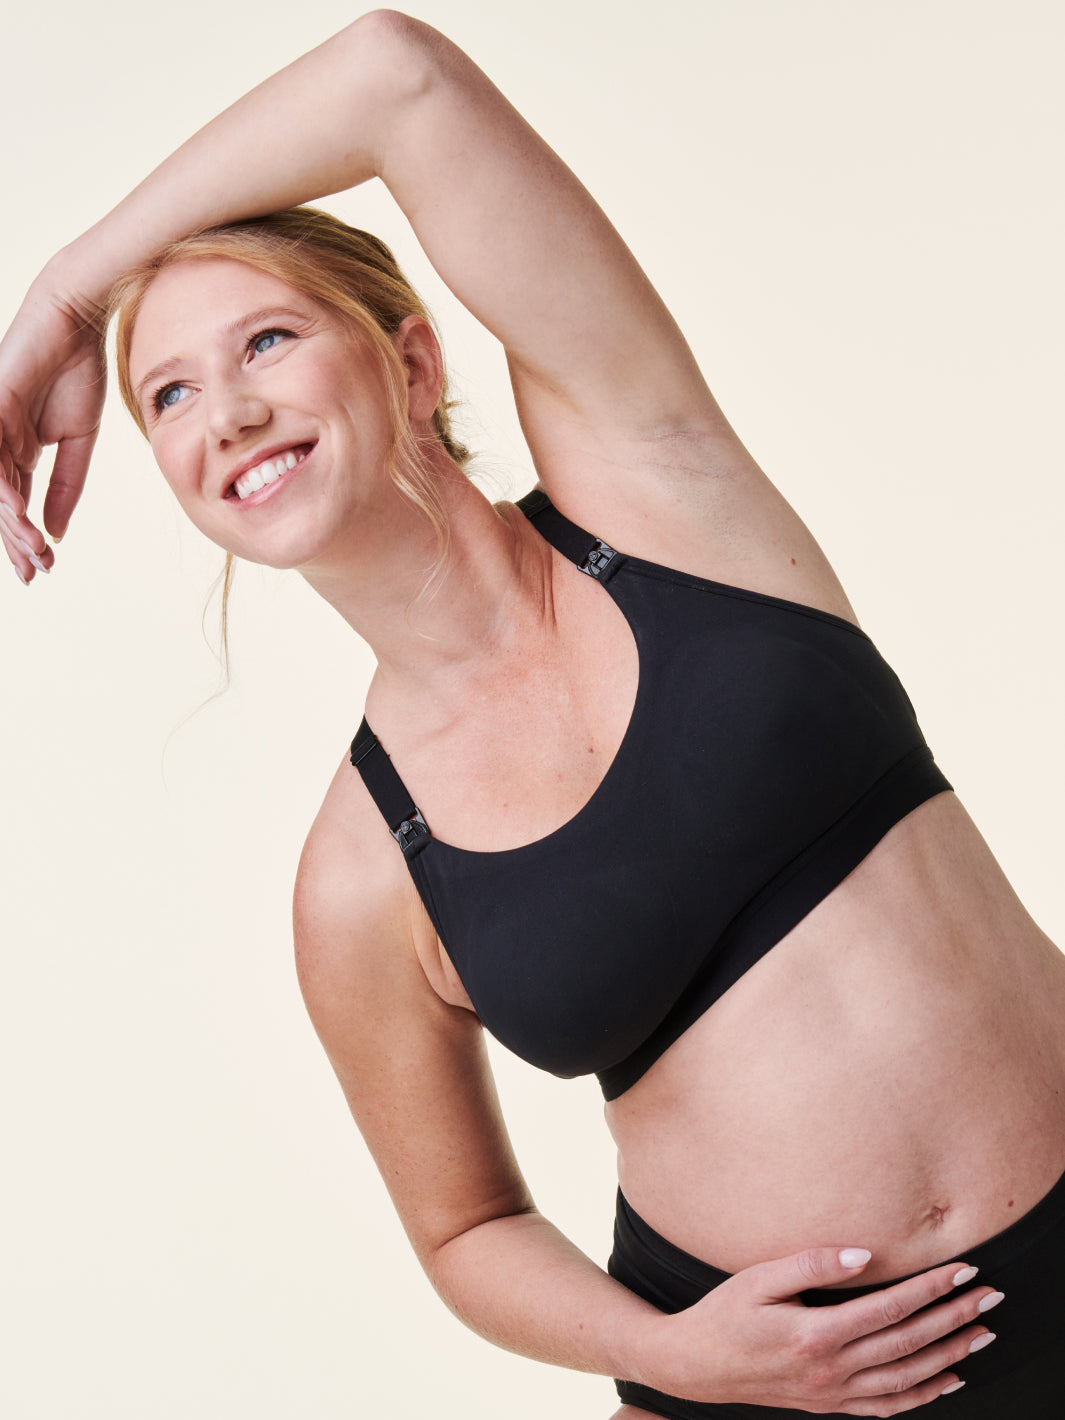 40 F Sports Bra Stick Bra rts Large Breast Pads Pregnancy Top Lace